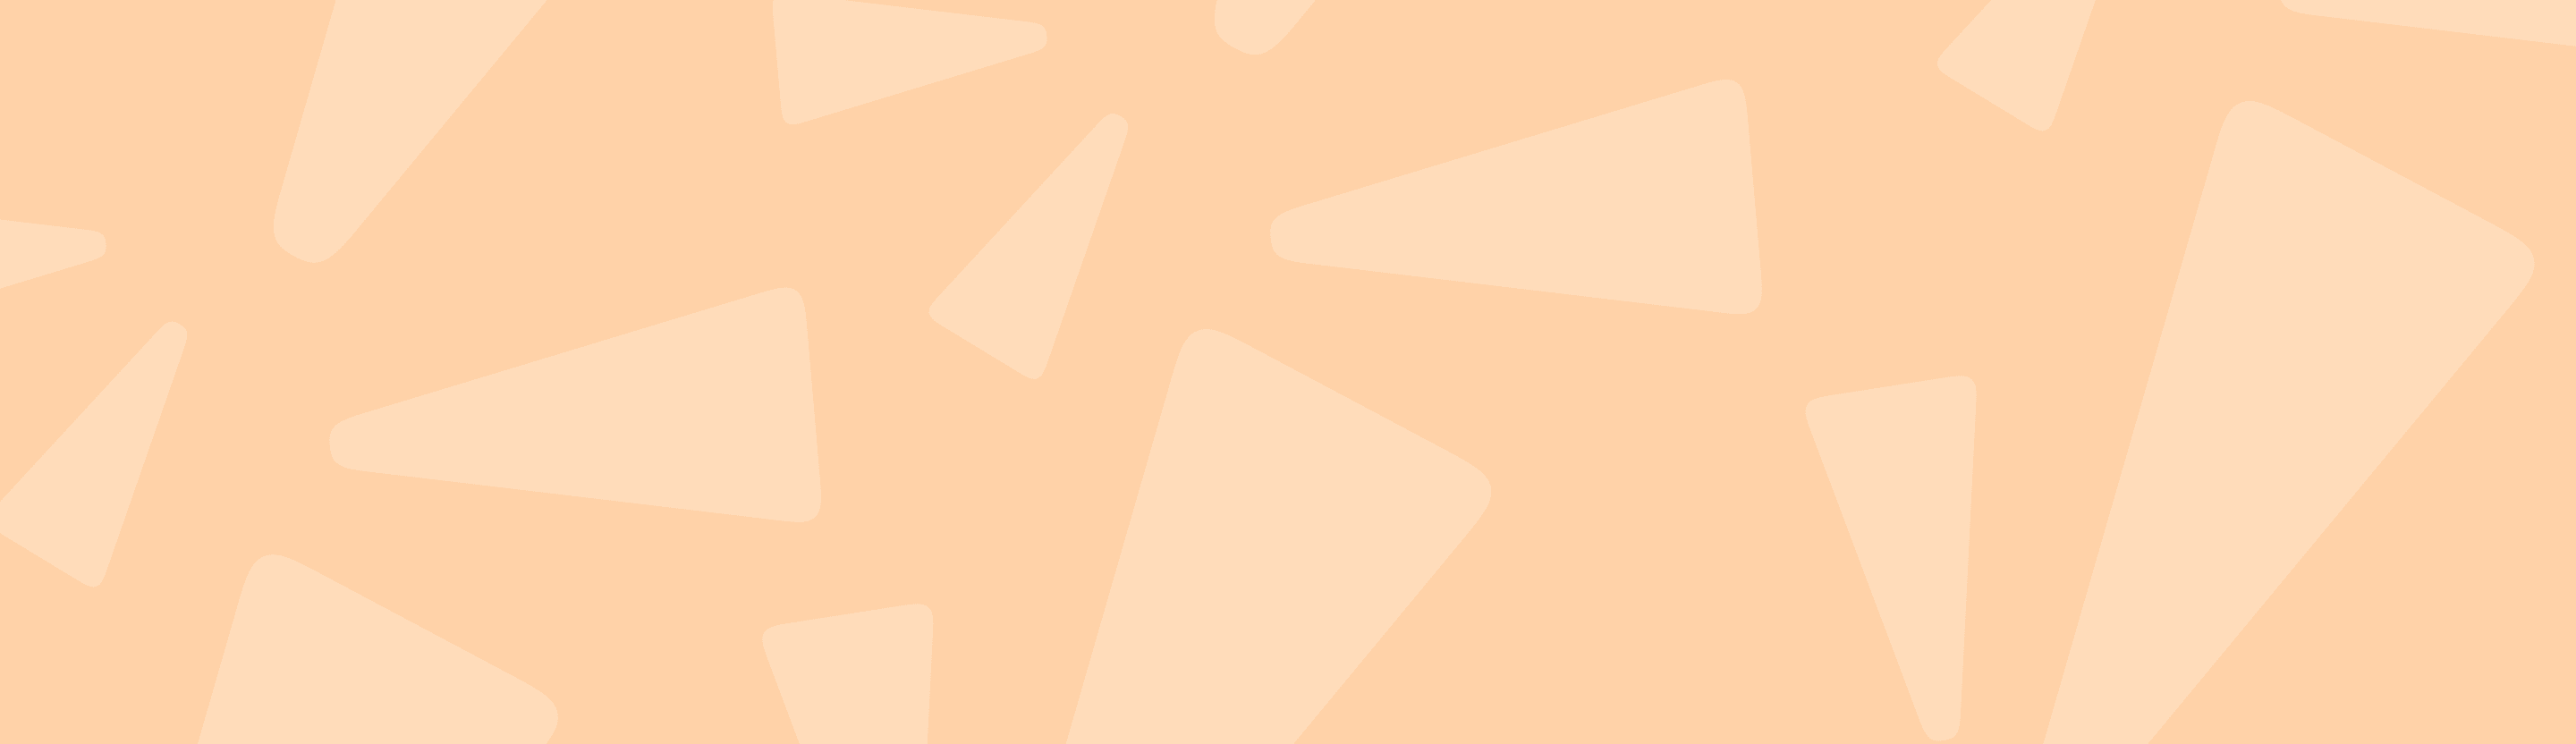 orange background image with pattern